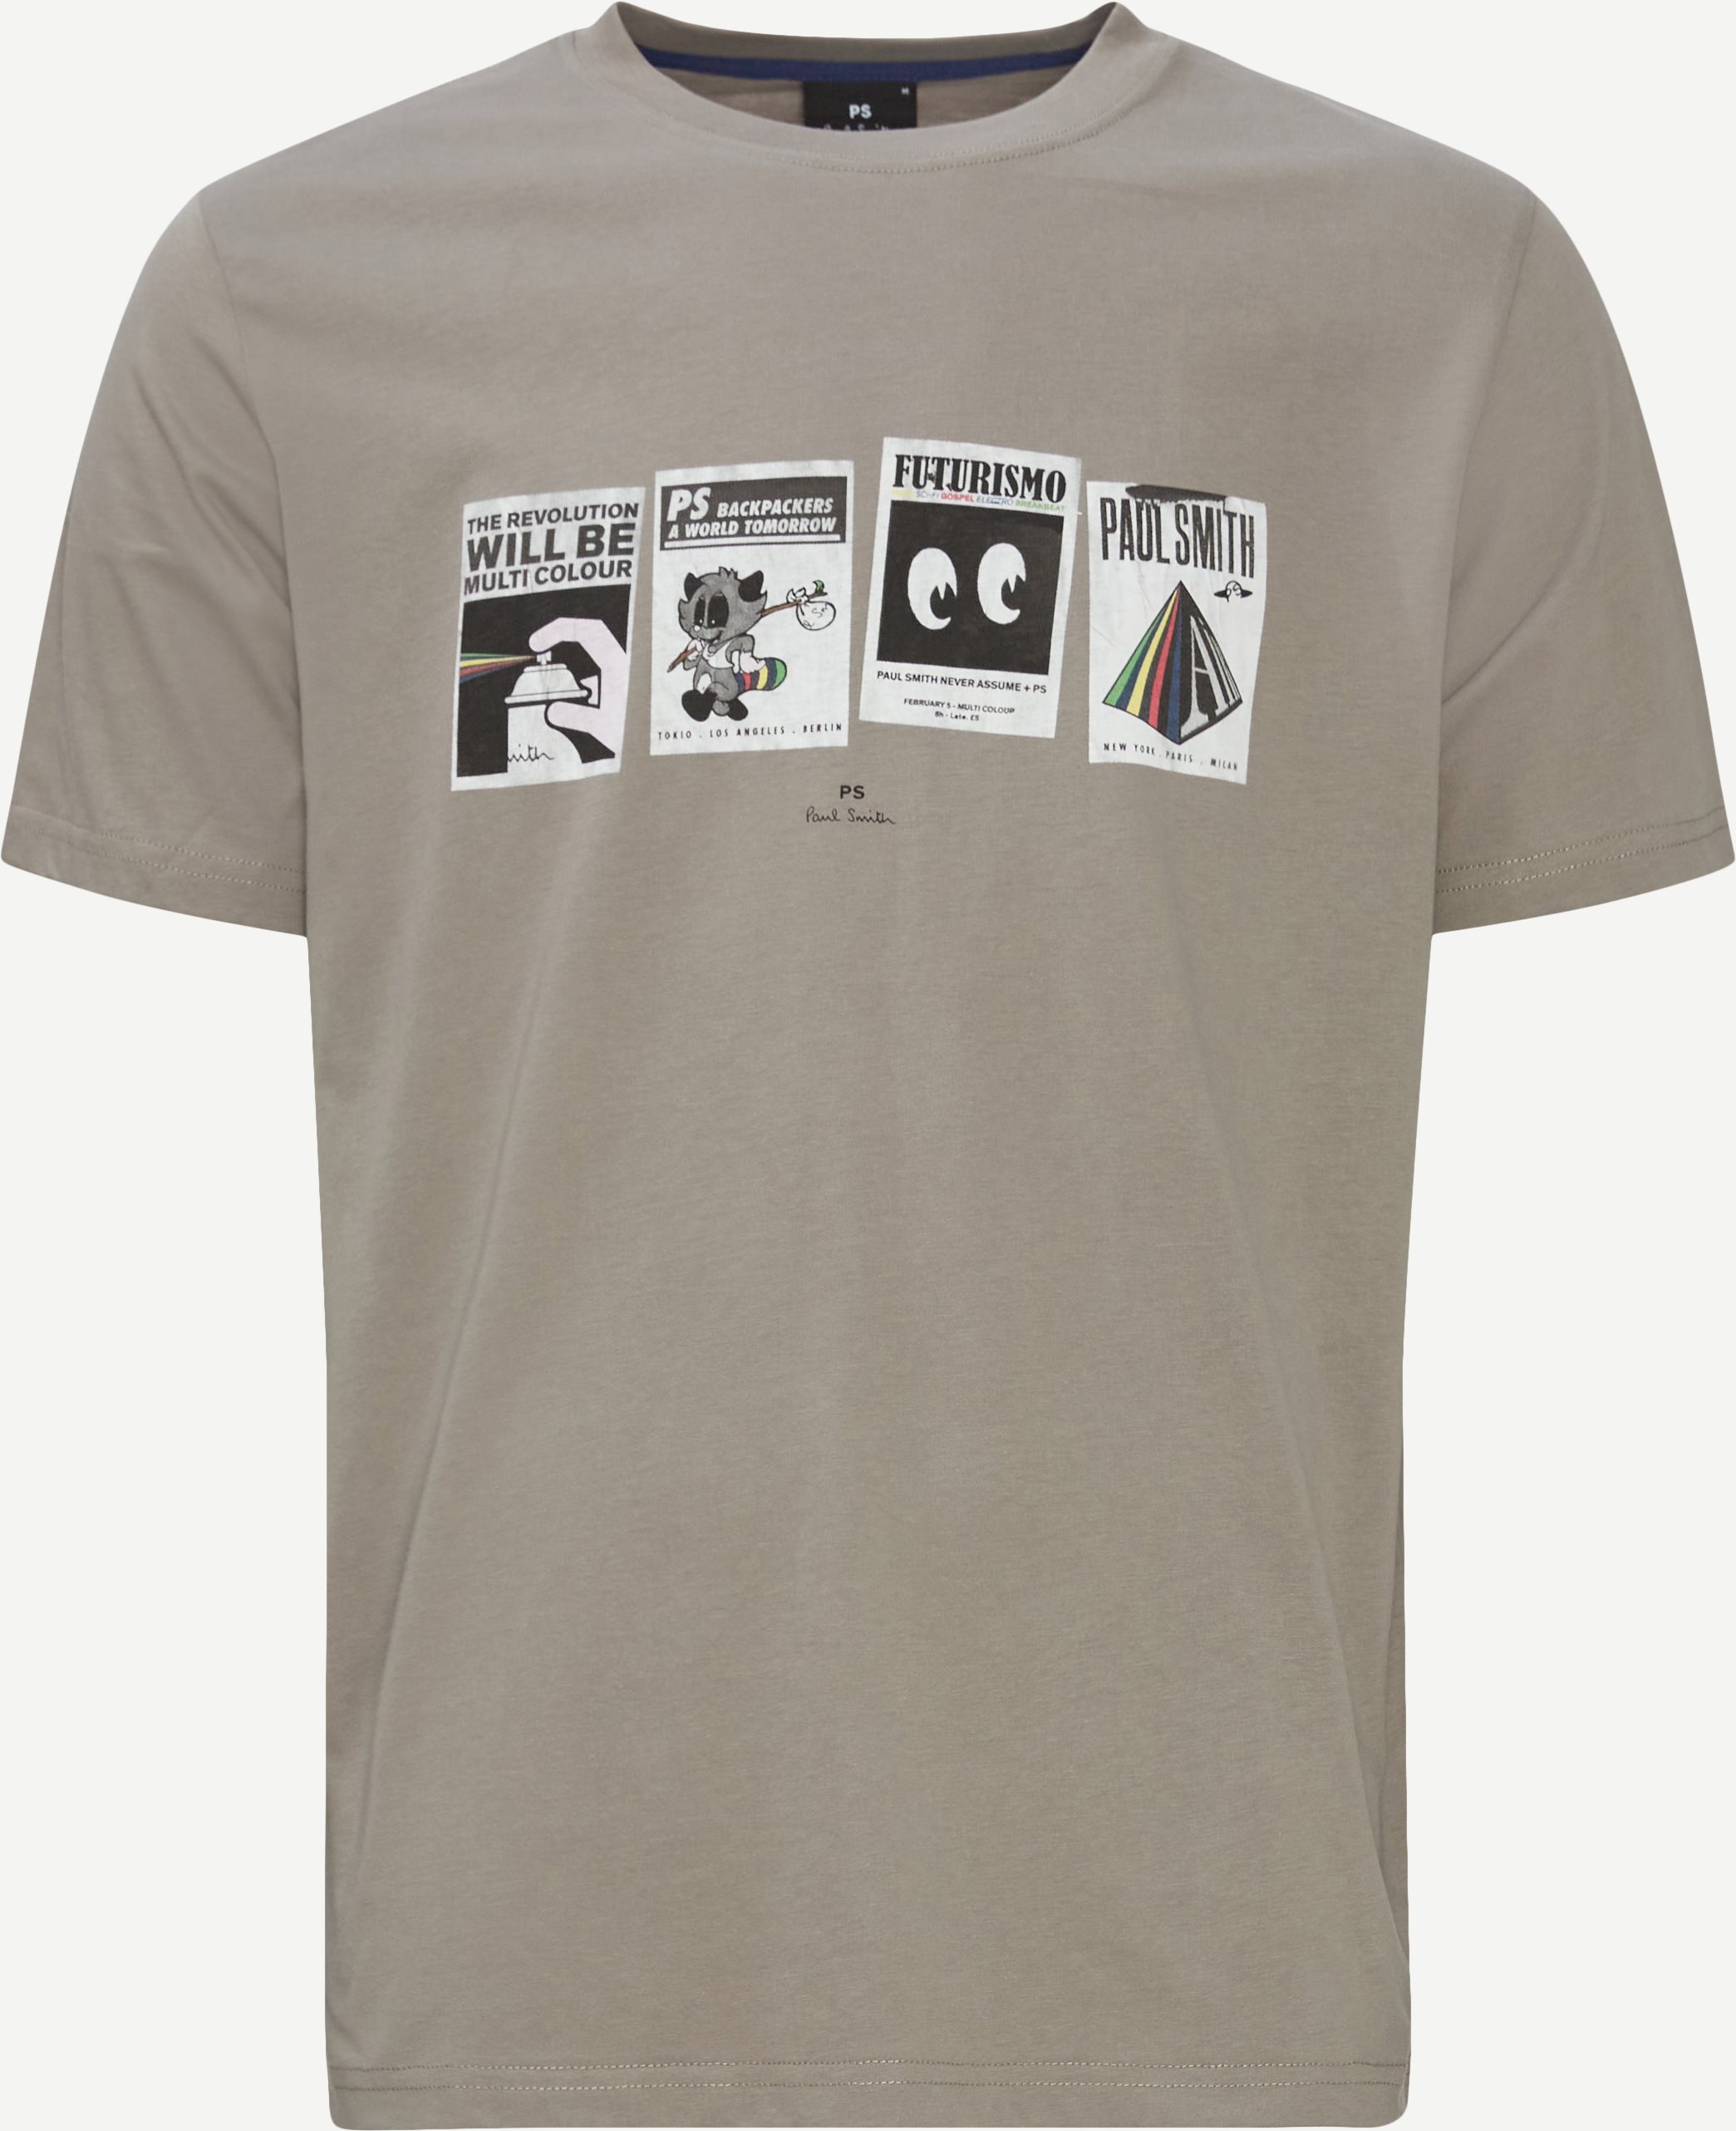 Fututismo T-Shirt - T-shirts - Regular fit - Grå